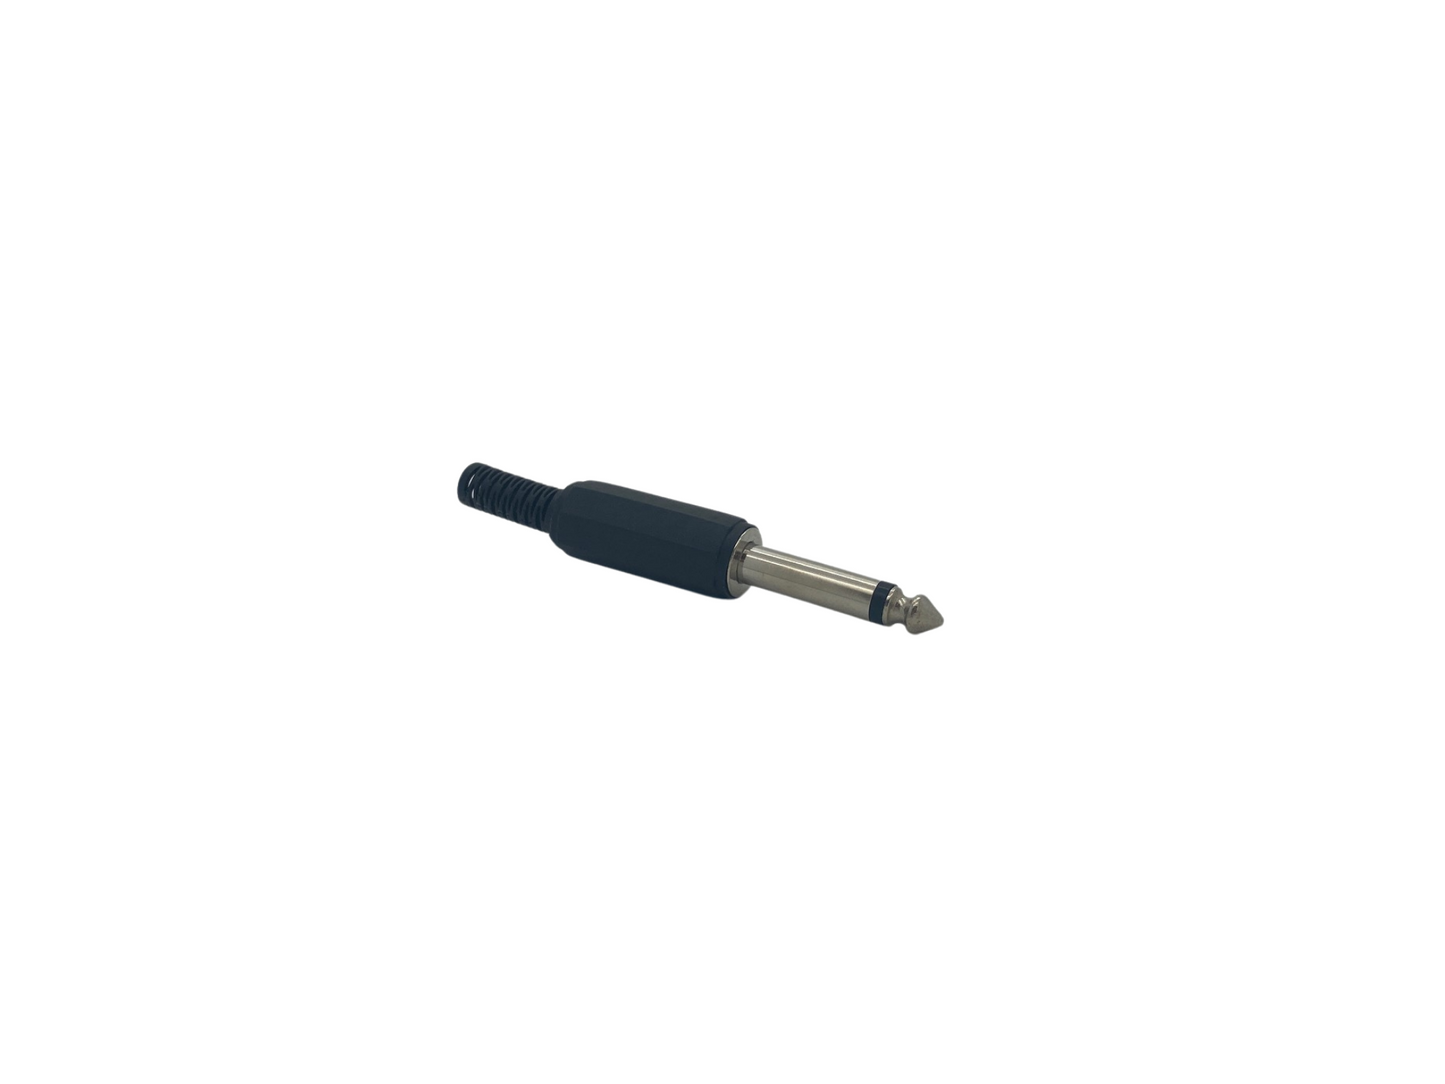 6.35mm (1/4") 2 Pole Mono Jack Plug Plastic Shell - Black